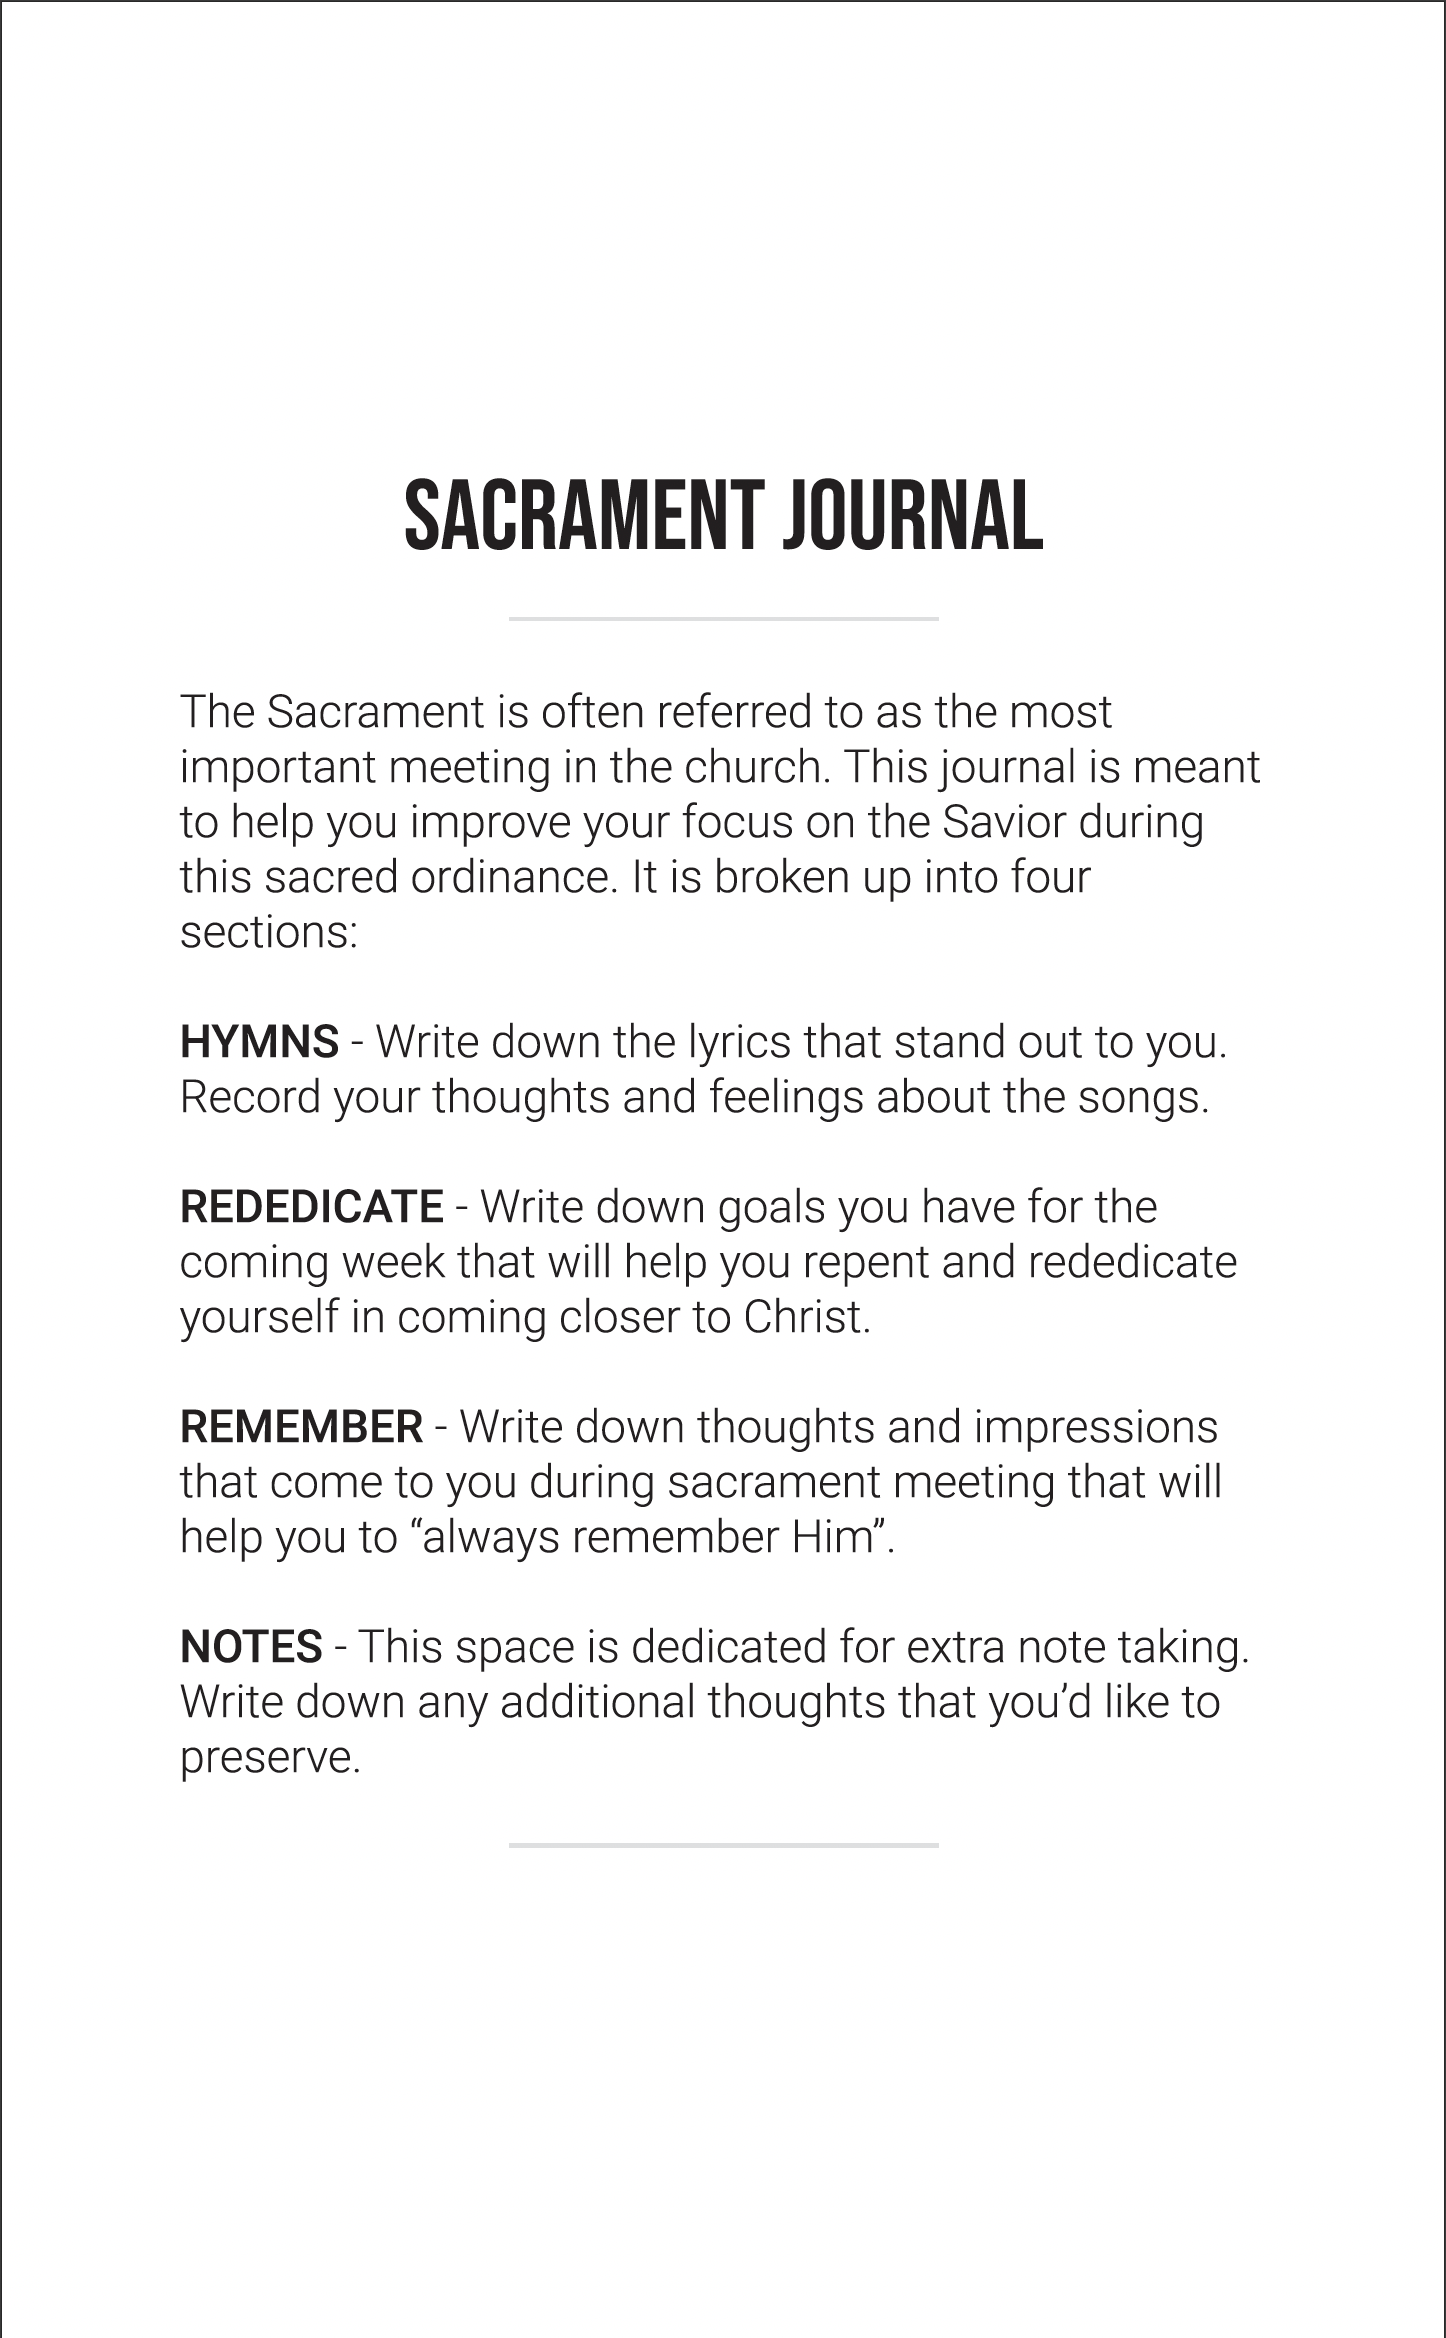 Sacrament Journal Floral Cover